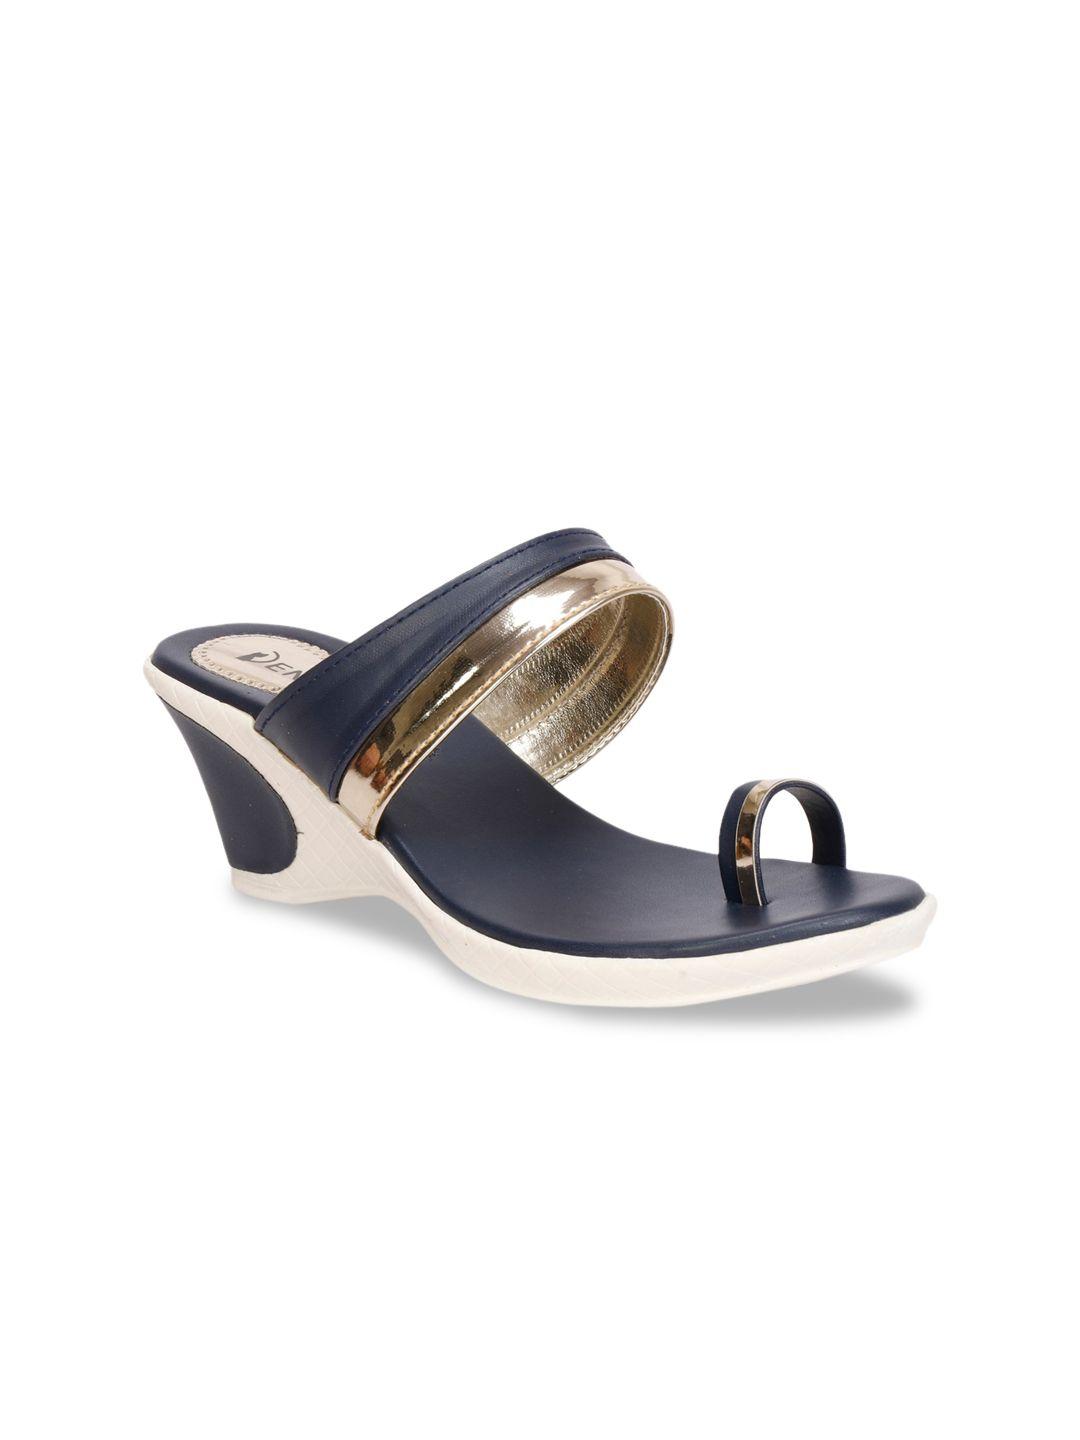 denill women blue & gold-toned colourblocked wedge sandals